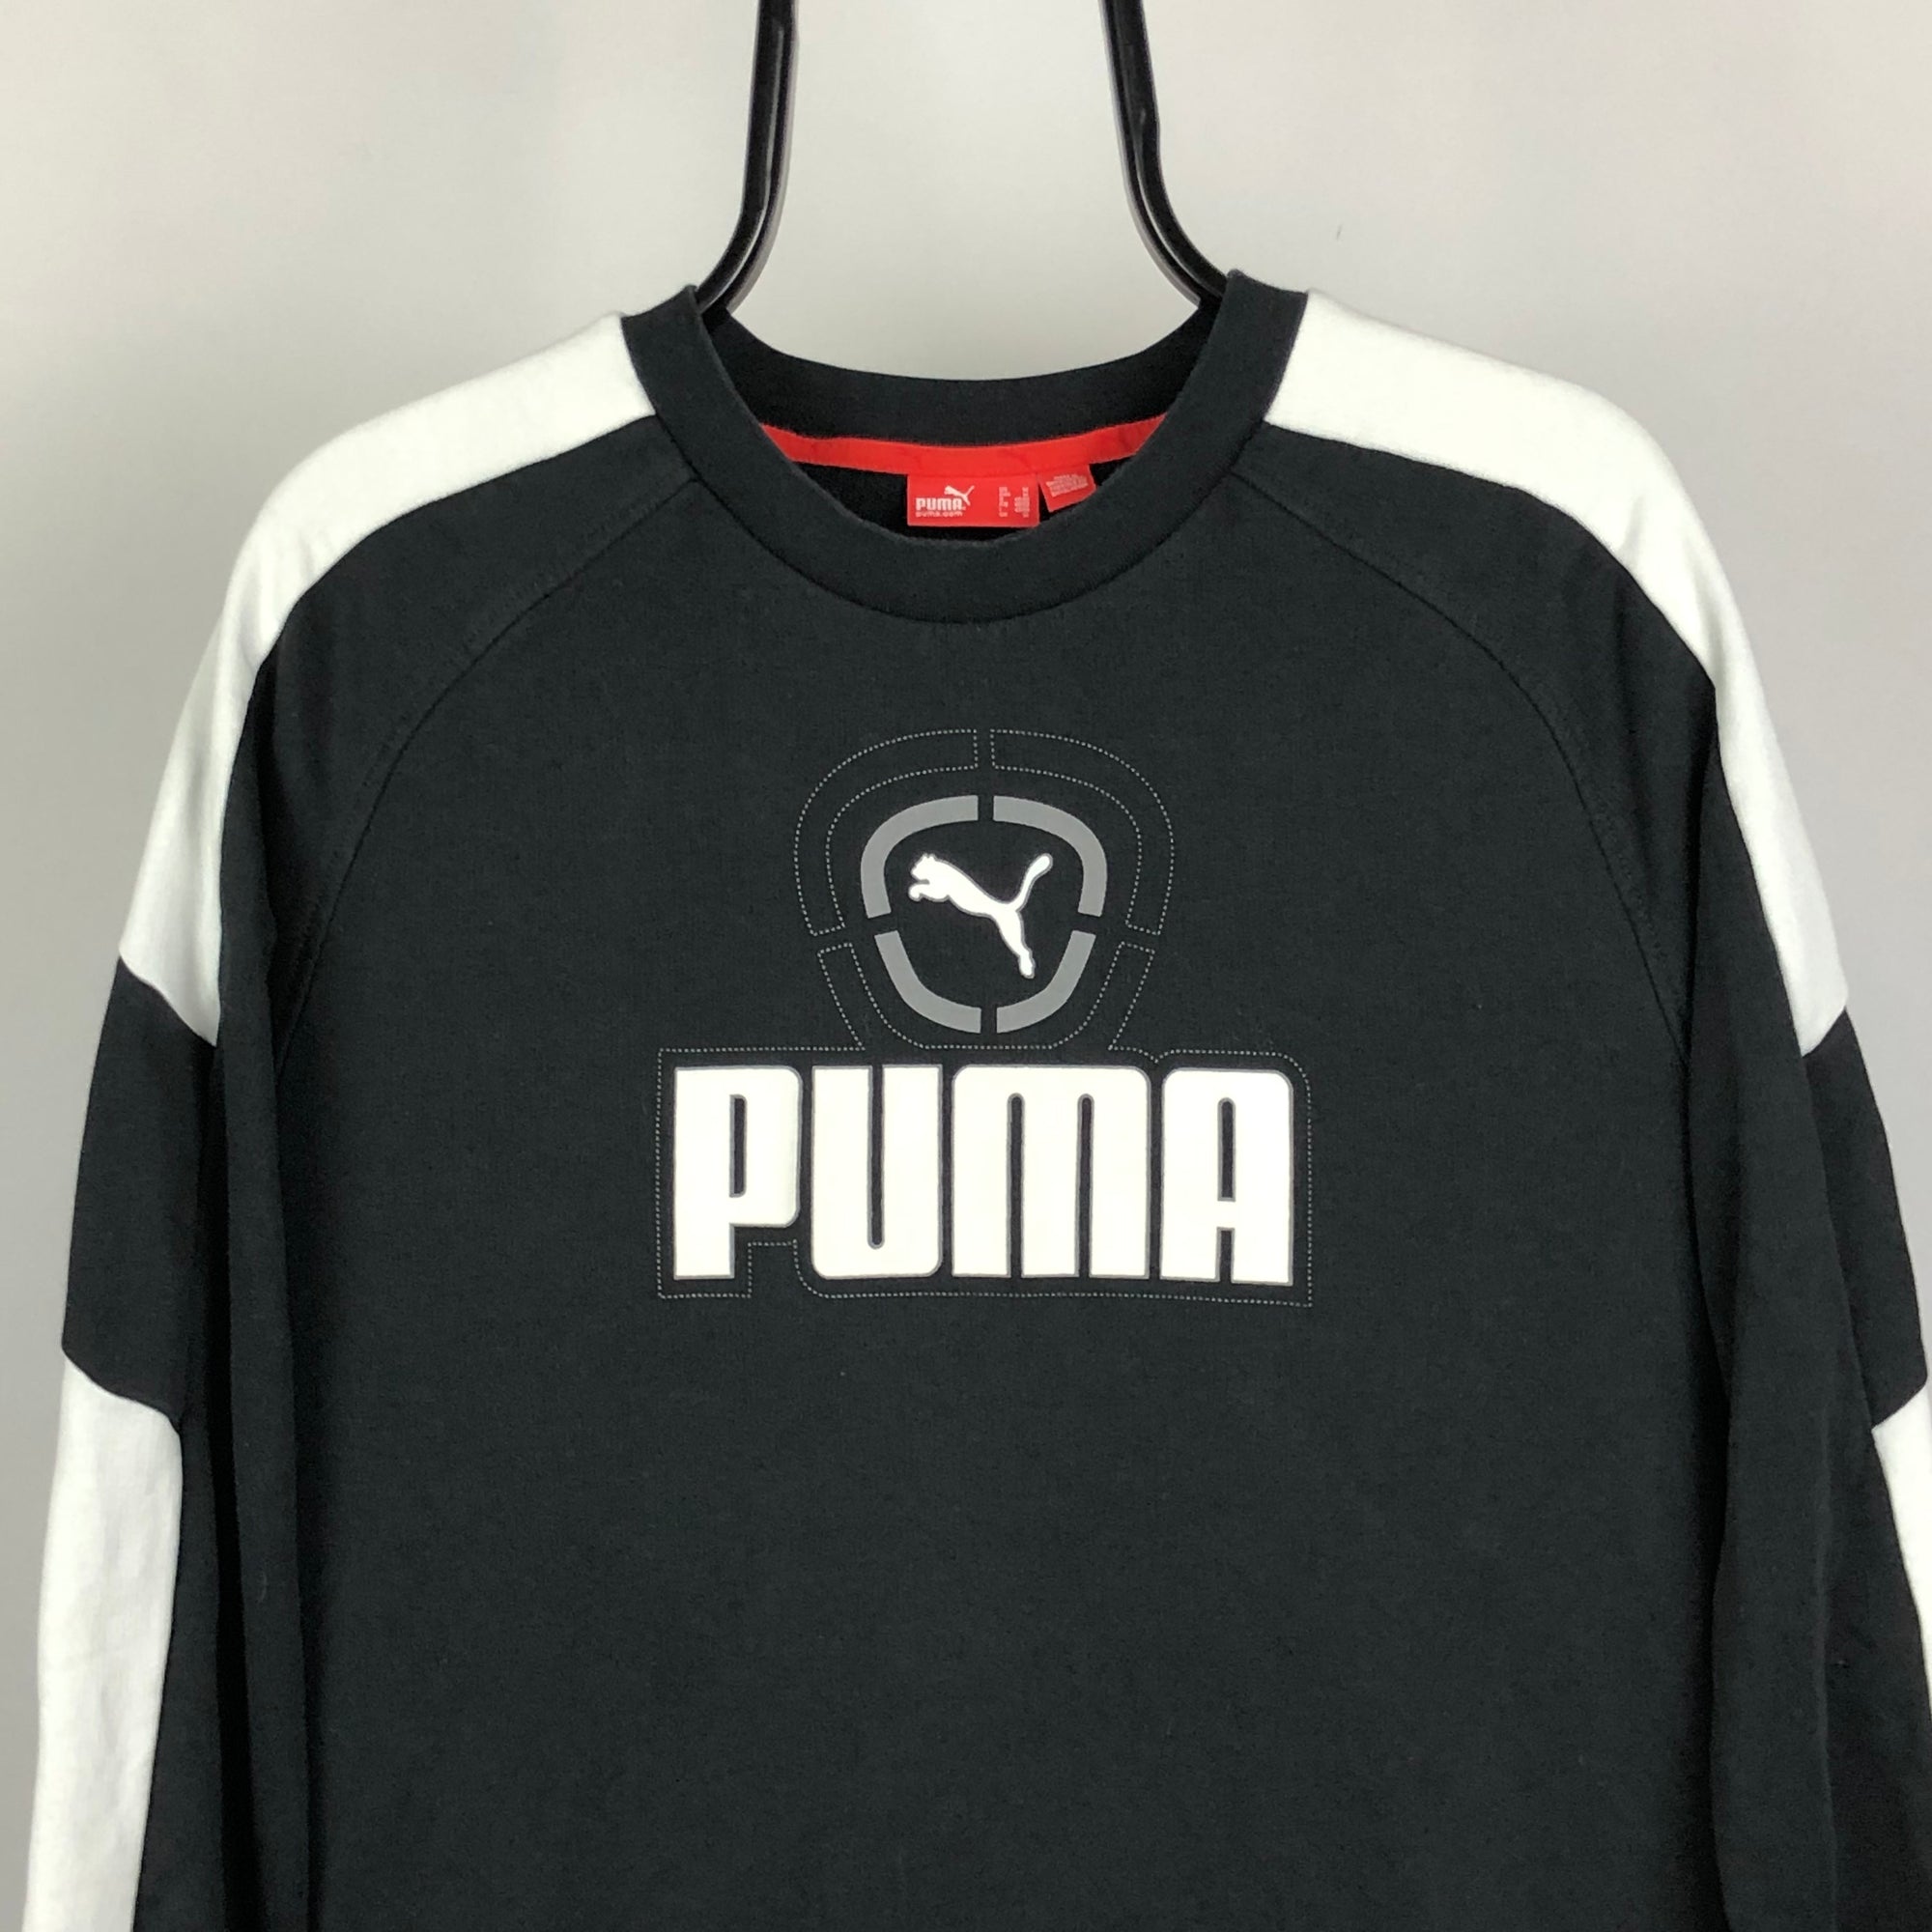 Puma Printed Spellout Sweatshirt in Black/White - Men's Medium/Women's Large